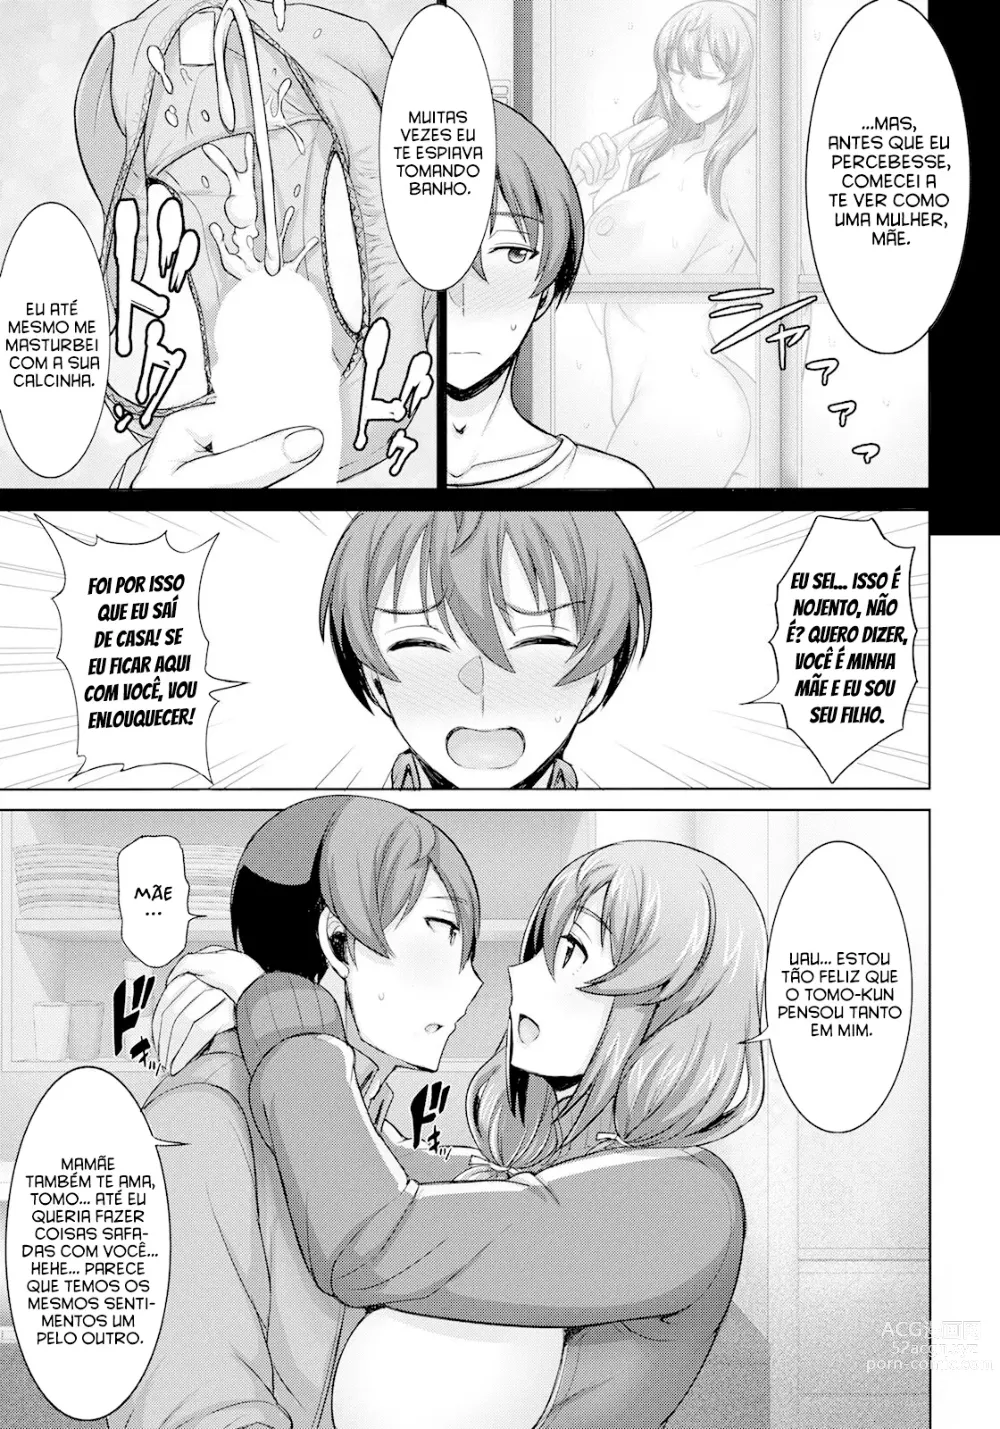 Page 5 of manga Dame Haha dakedo Suki nanda! - useless mother, but I love her!